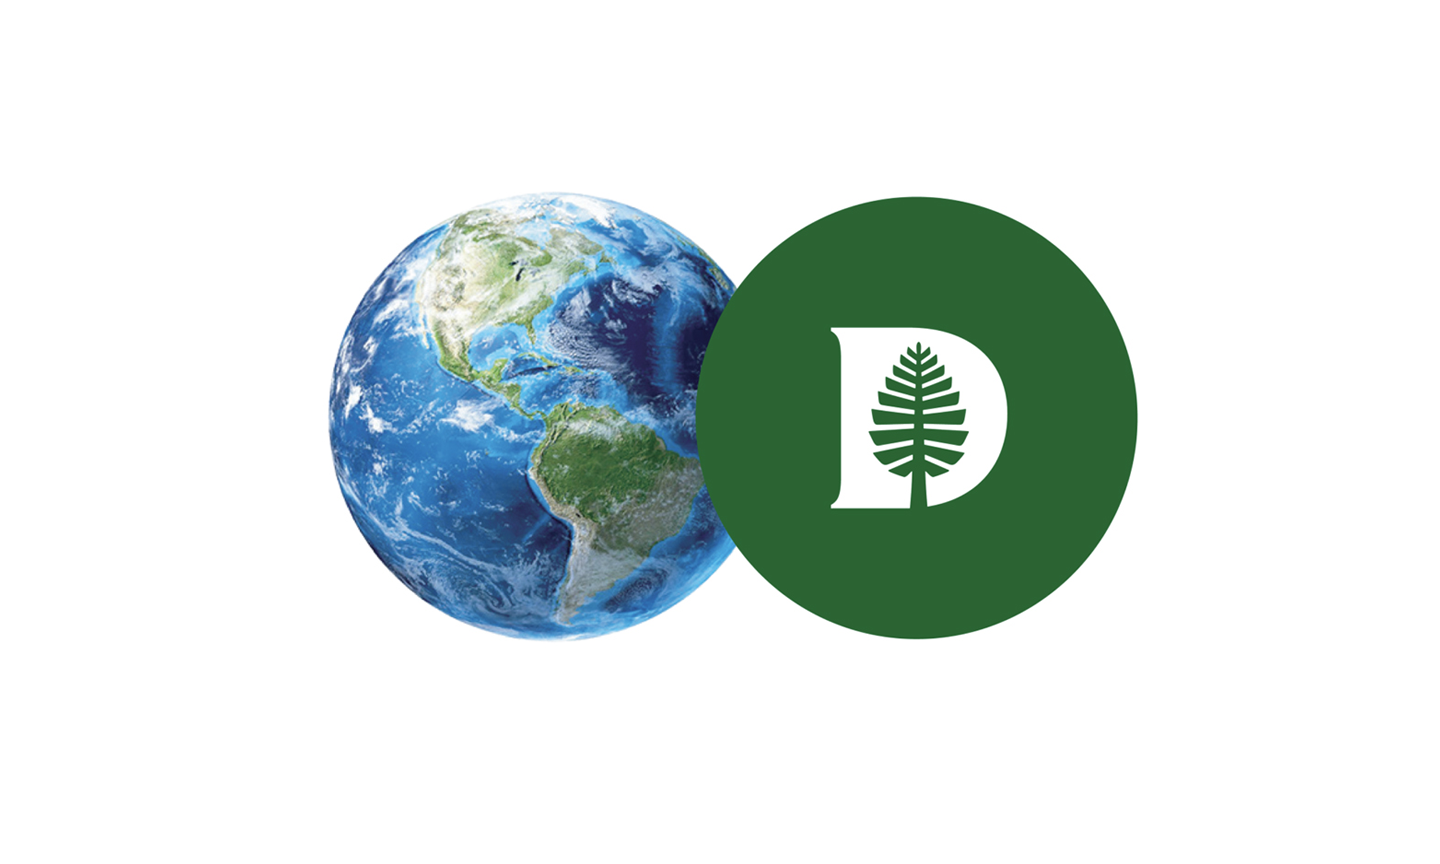 Globe illustration next to a Dartmouth logo in the same size circle